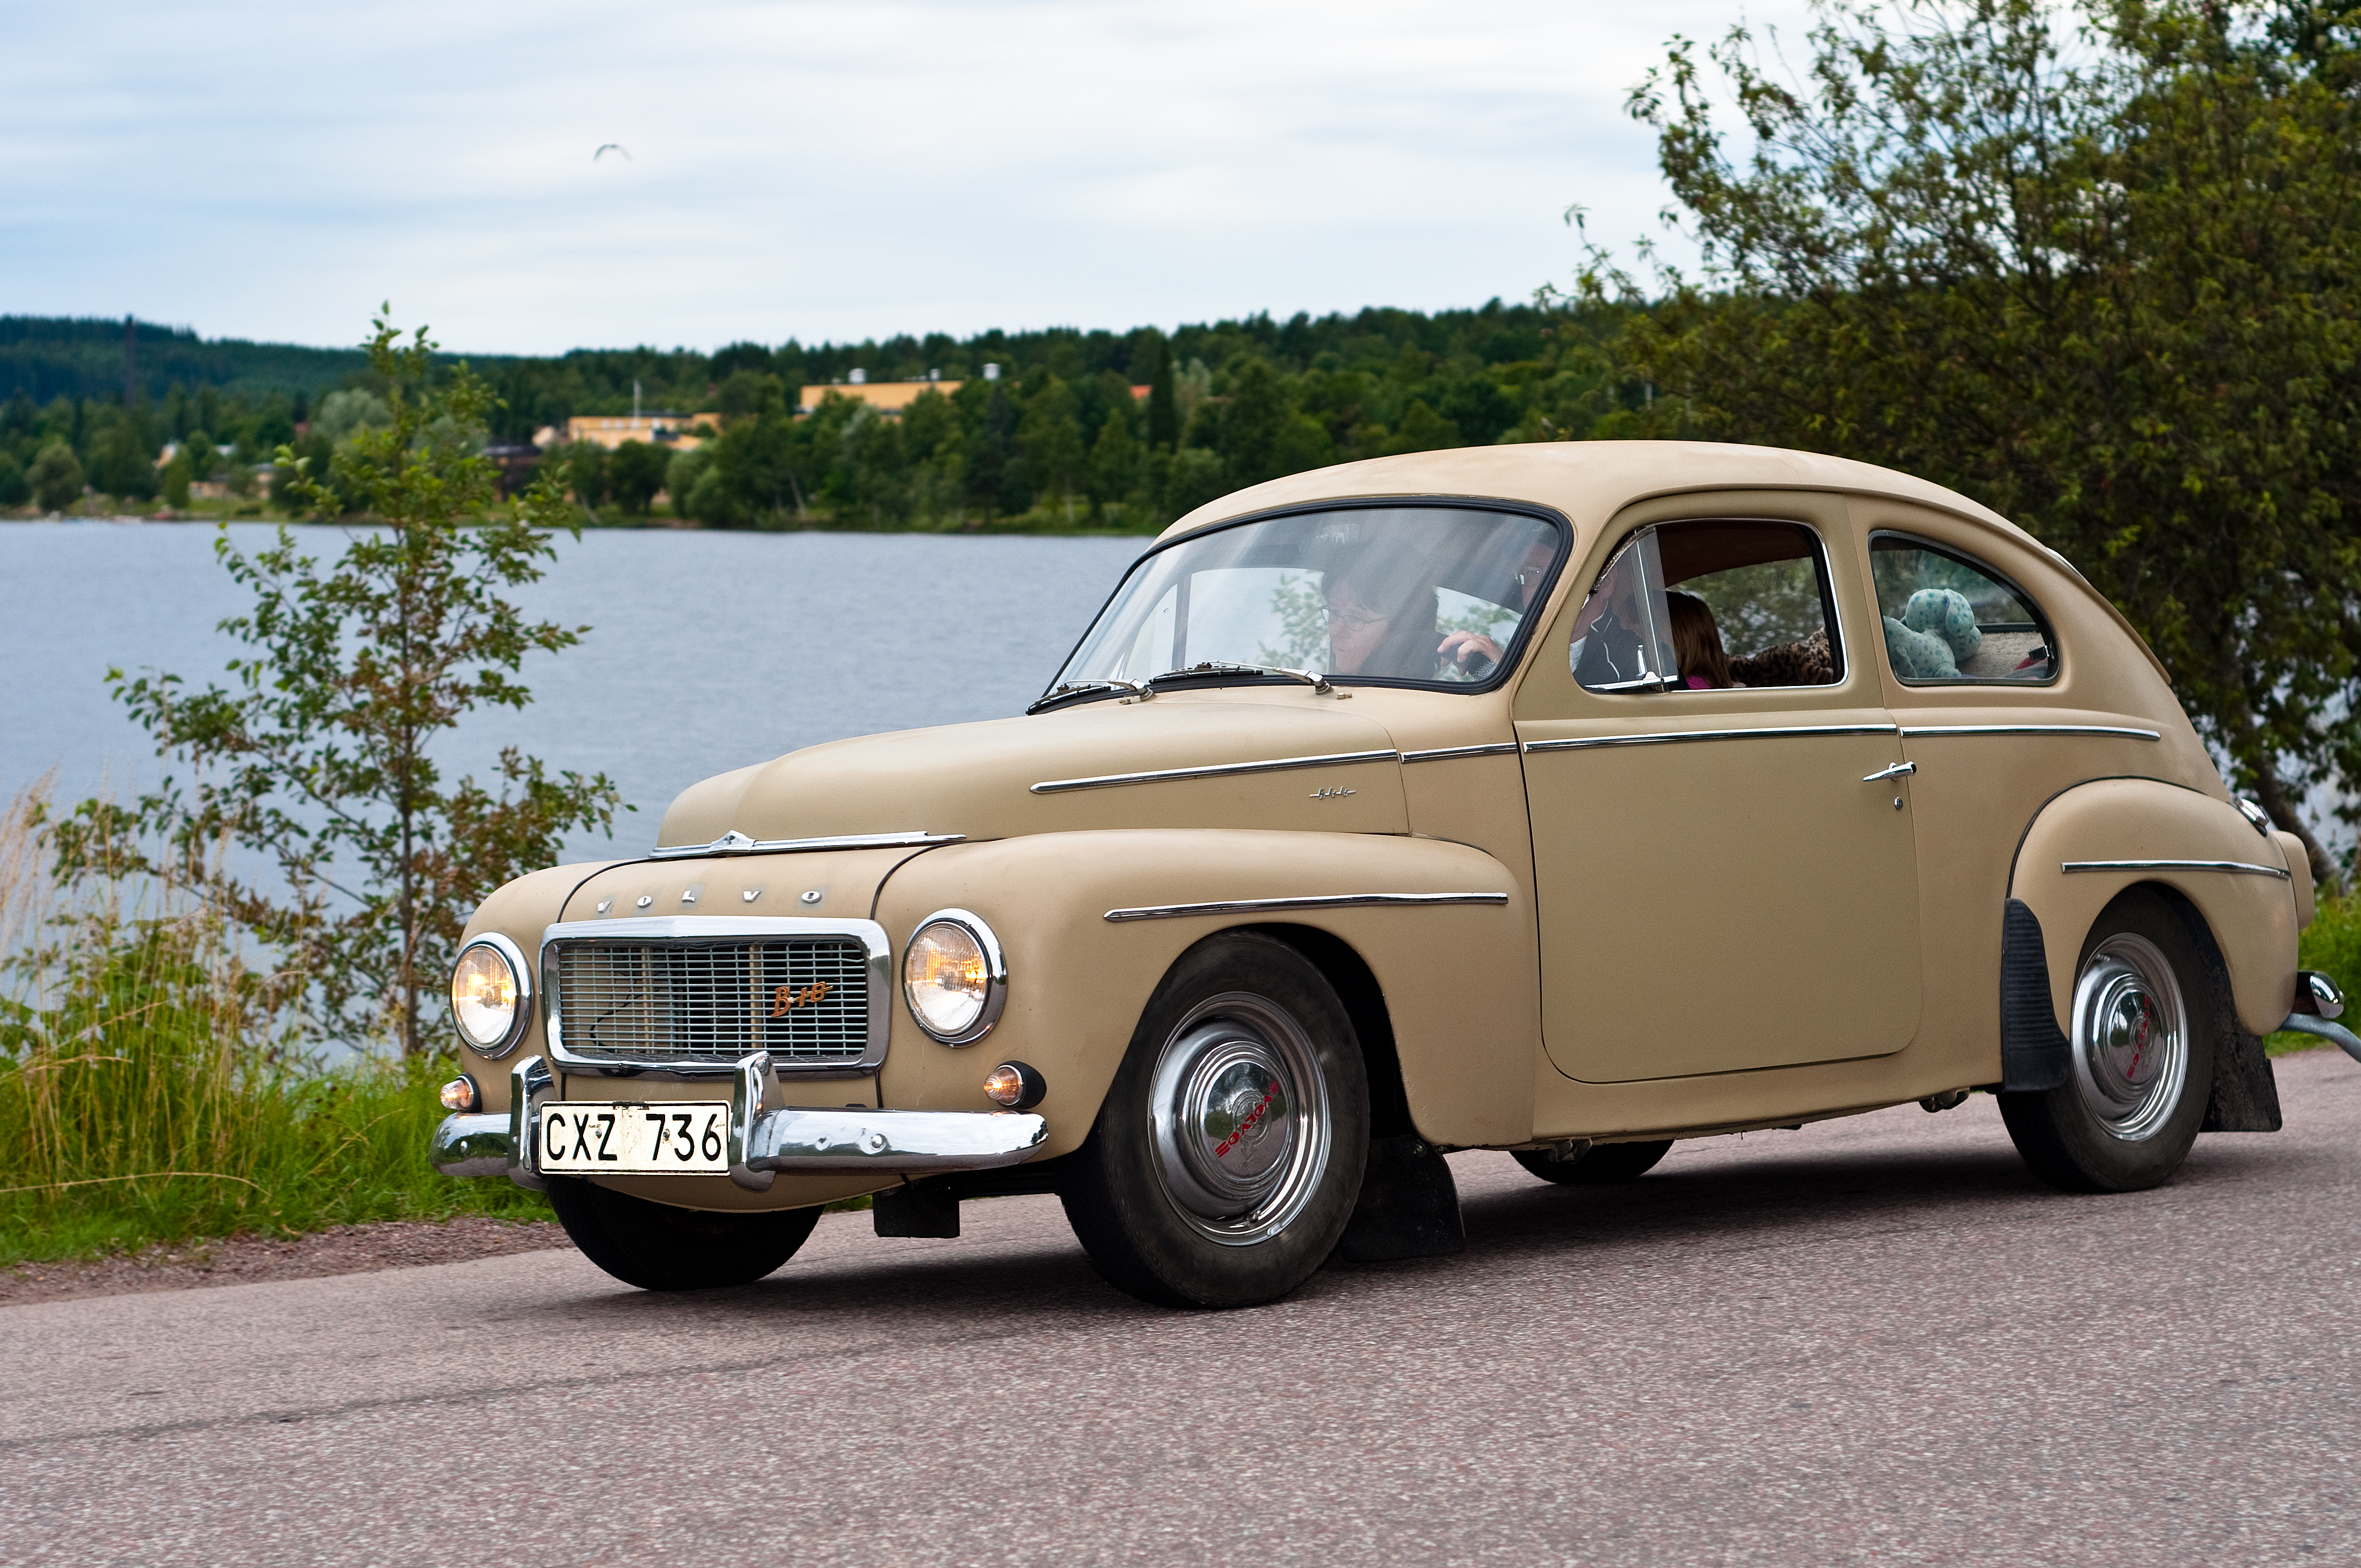 Volvo PV 544 B18 from 1961, 544, Car, Classic, Nostalgia, HQ Photo